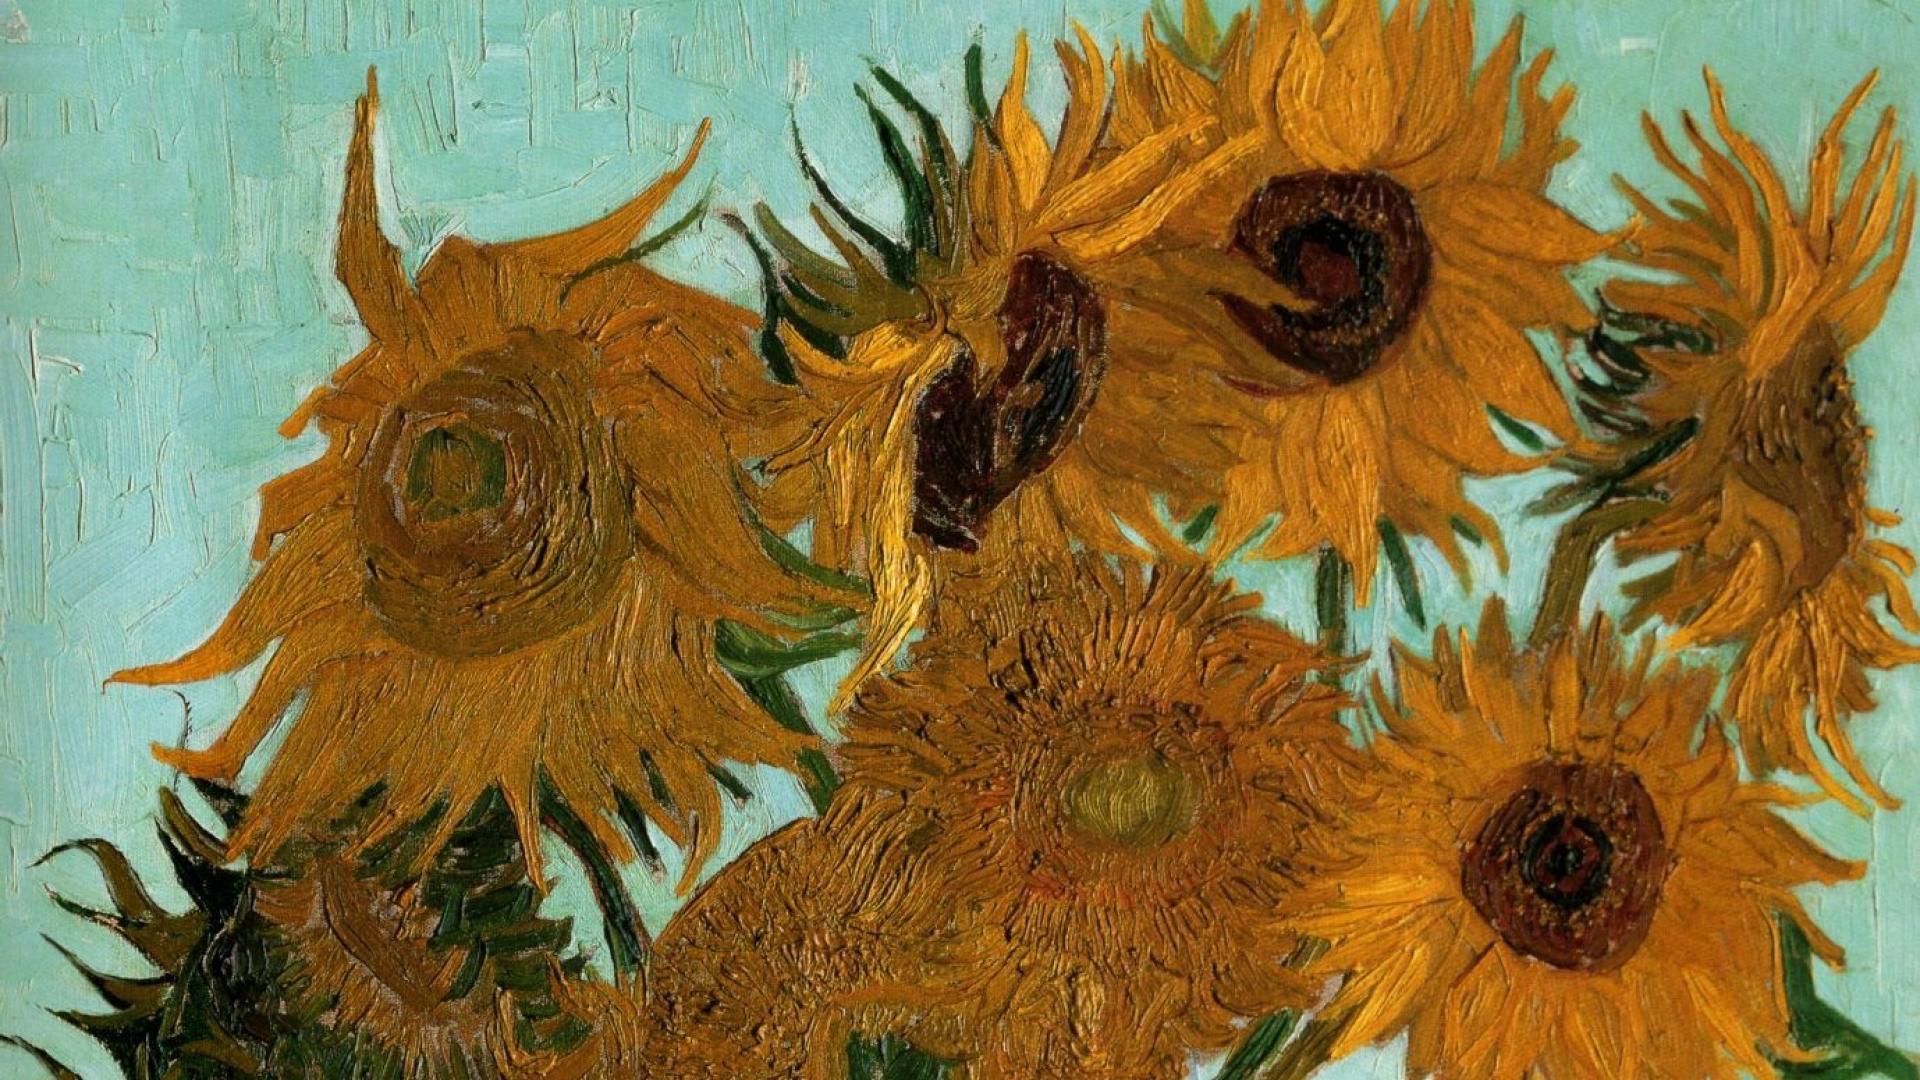 Sunflower Wallpapers: Free HD Download [500+ HQ] | Unsplash